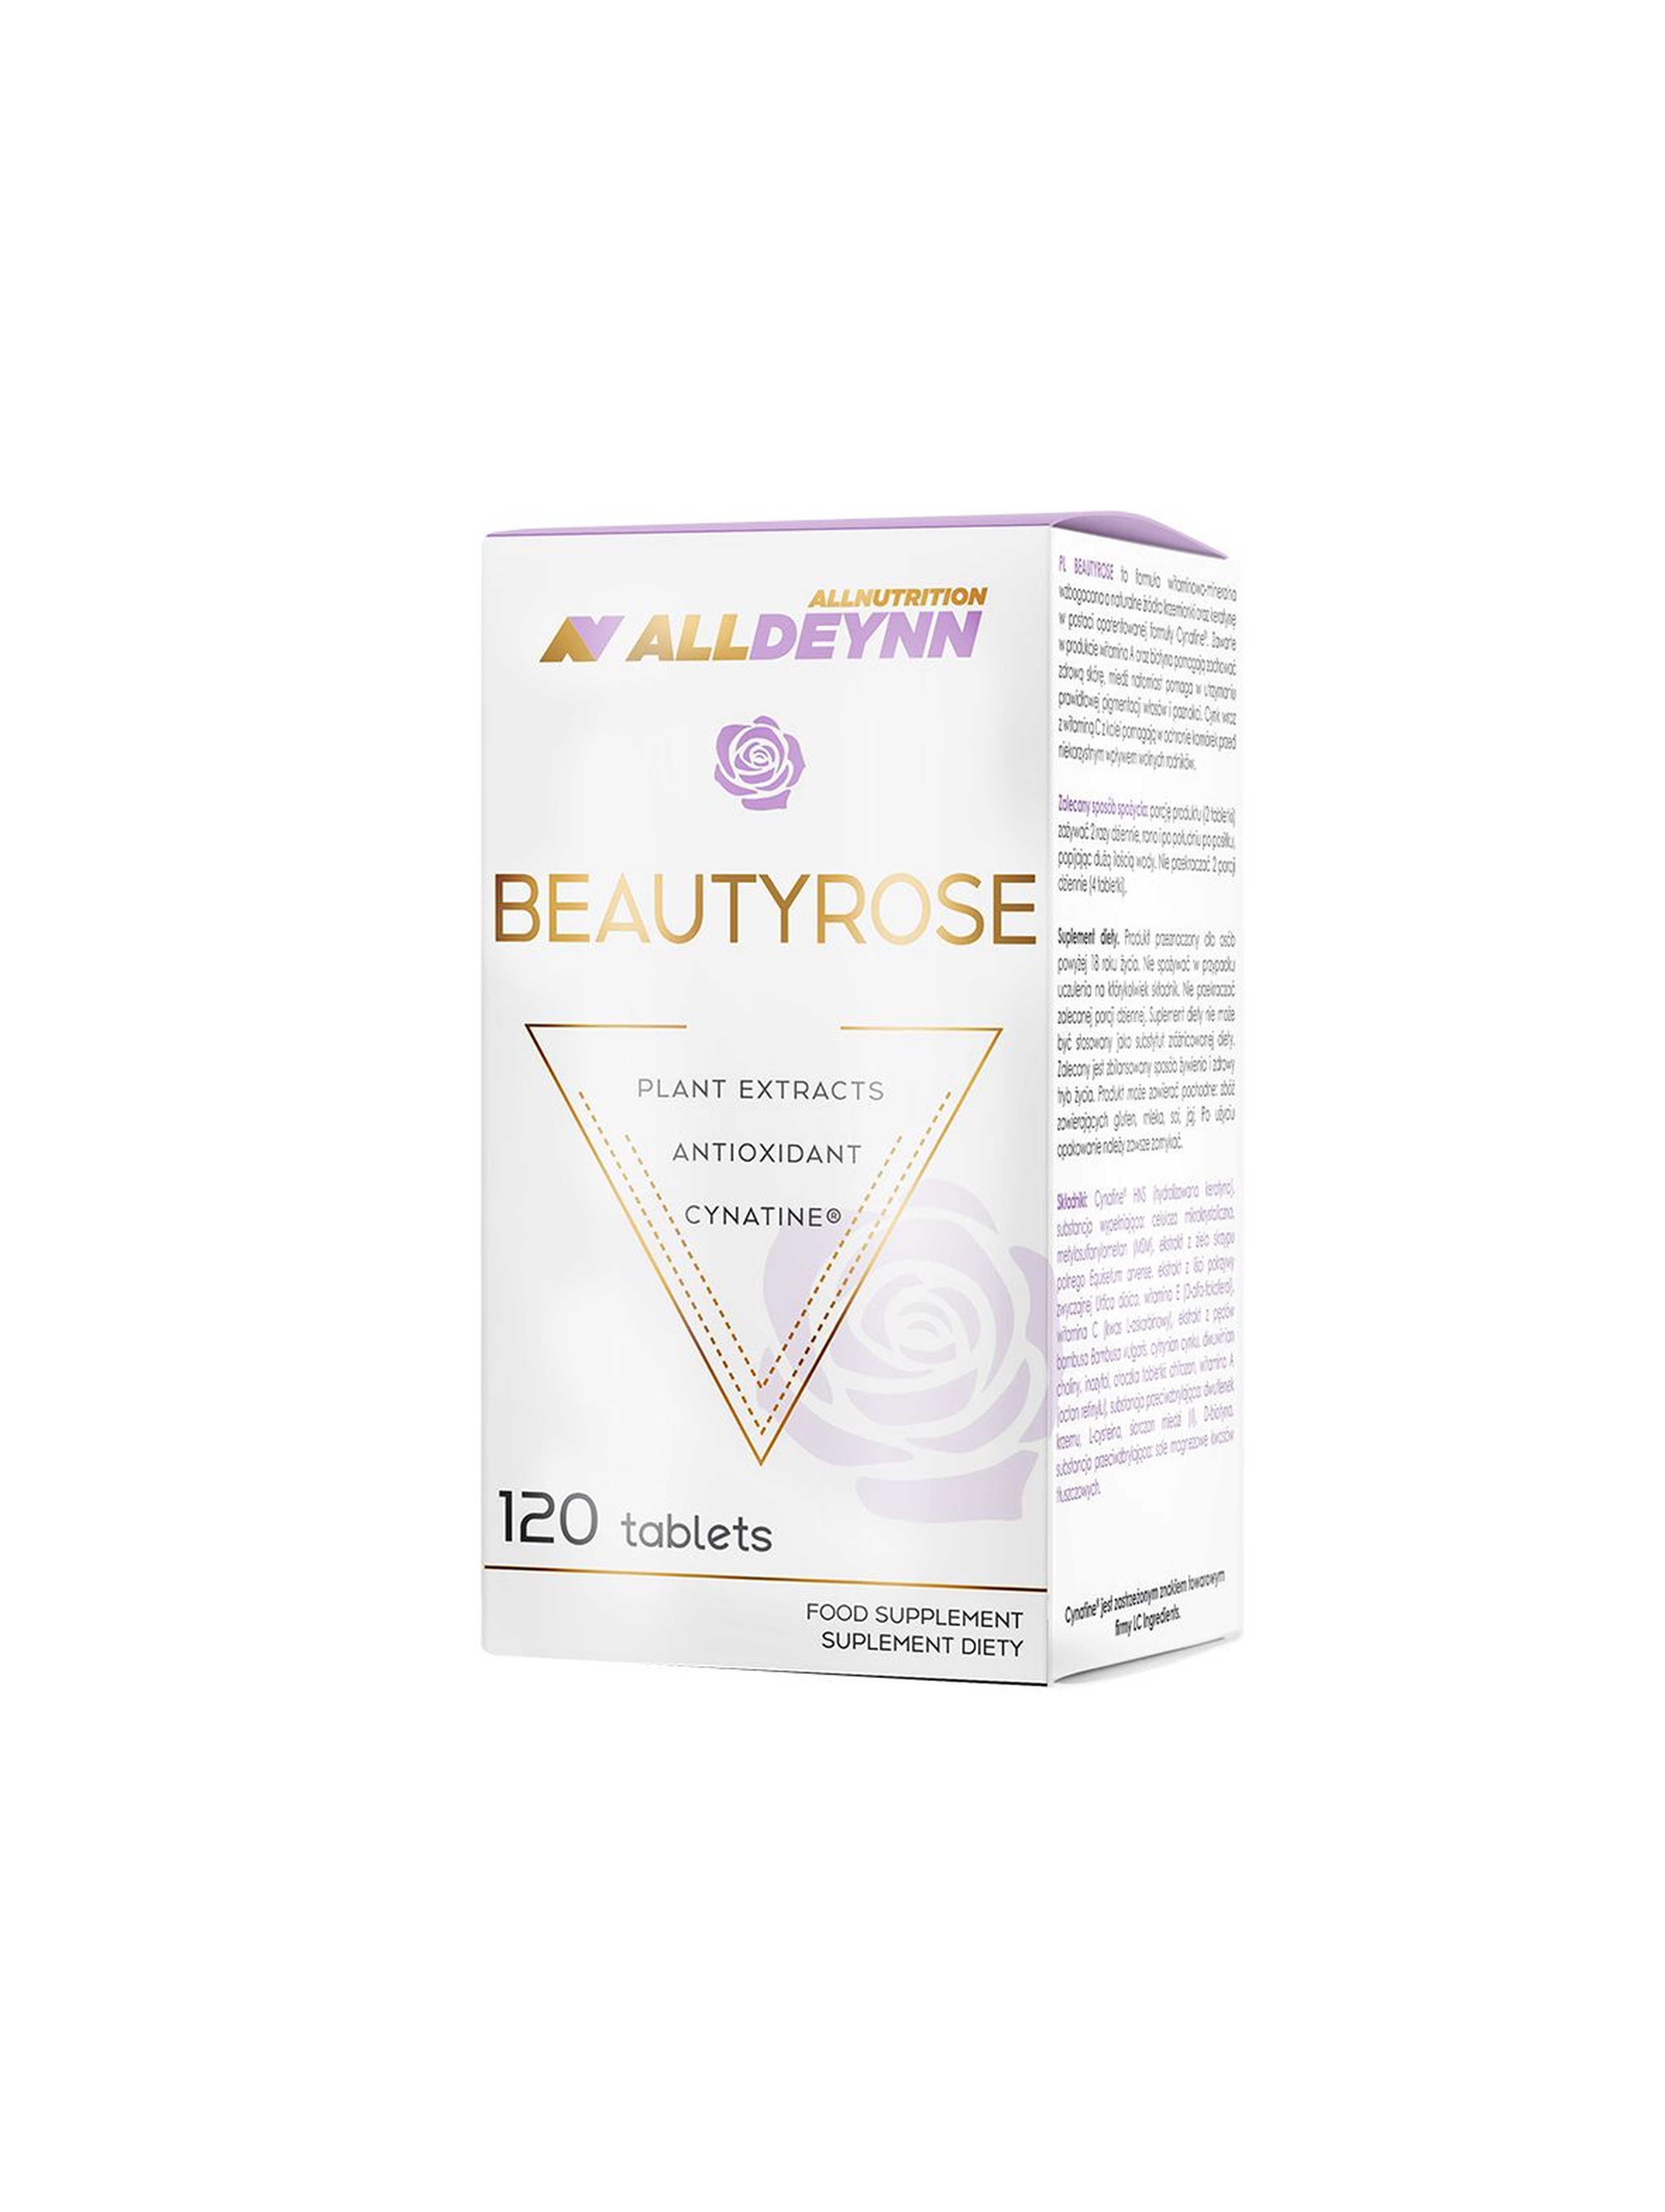 Suplementy diety - Allnutrition ALLDEYNN Beautyrose - 120 kapsułek